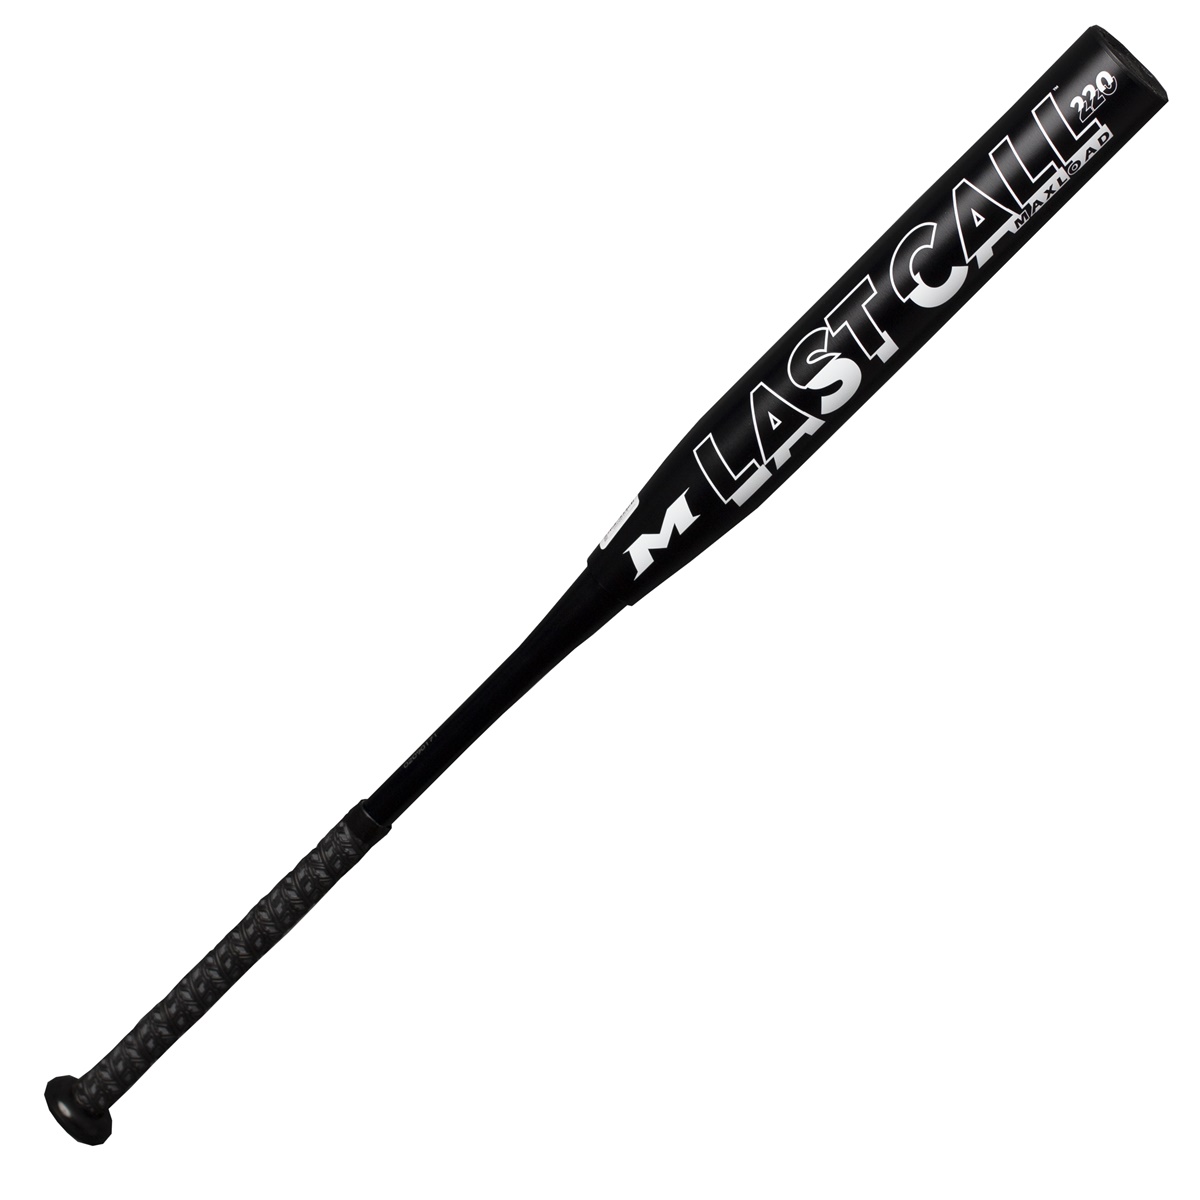 miken-last-call-12-barrel-maxload-usssa-slow-pitch-softball-bat-34-inch-26-oz MLC12U-3-26 Miken 658925045479 Dont miss out on the 2021 Last Call USSSA bat! USSSA